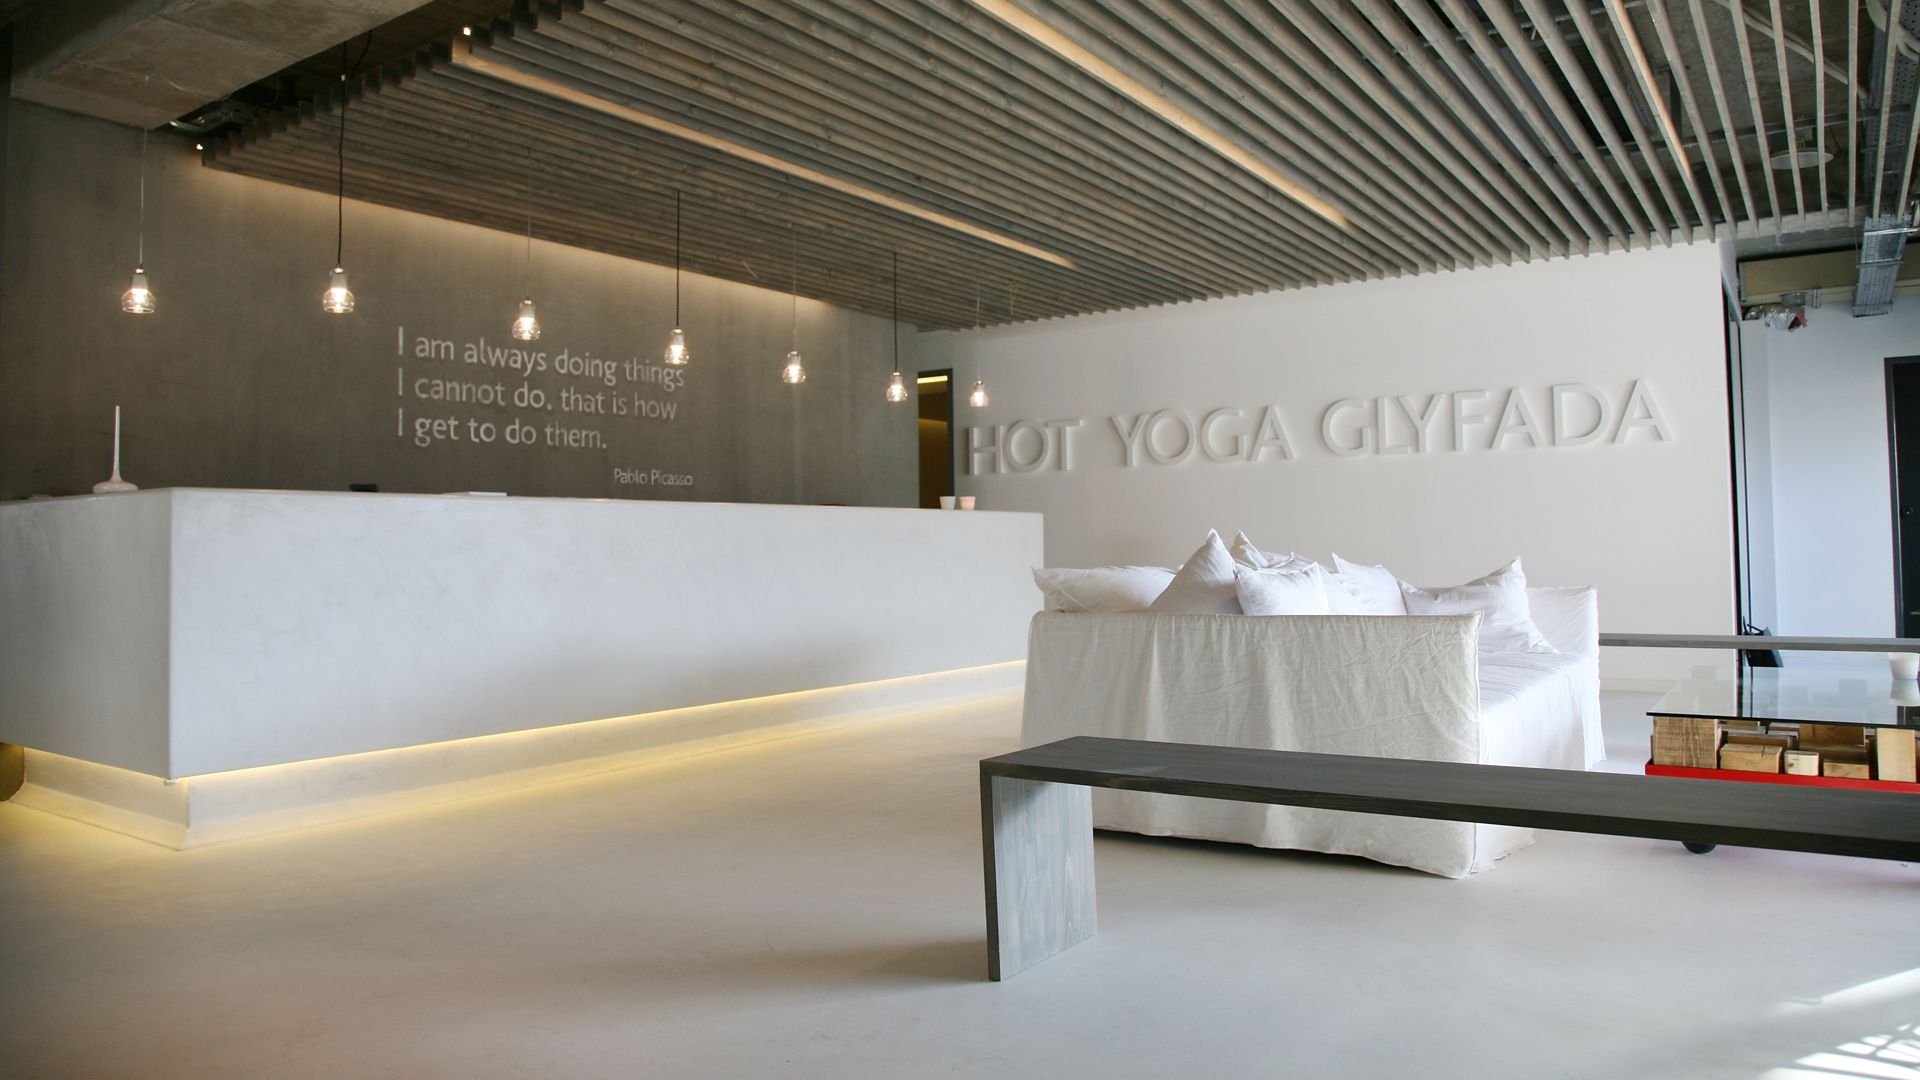 Floor of Yoga Studio in Glyfada, Greece